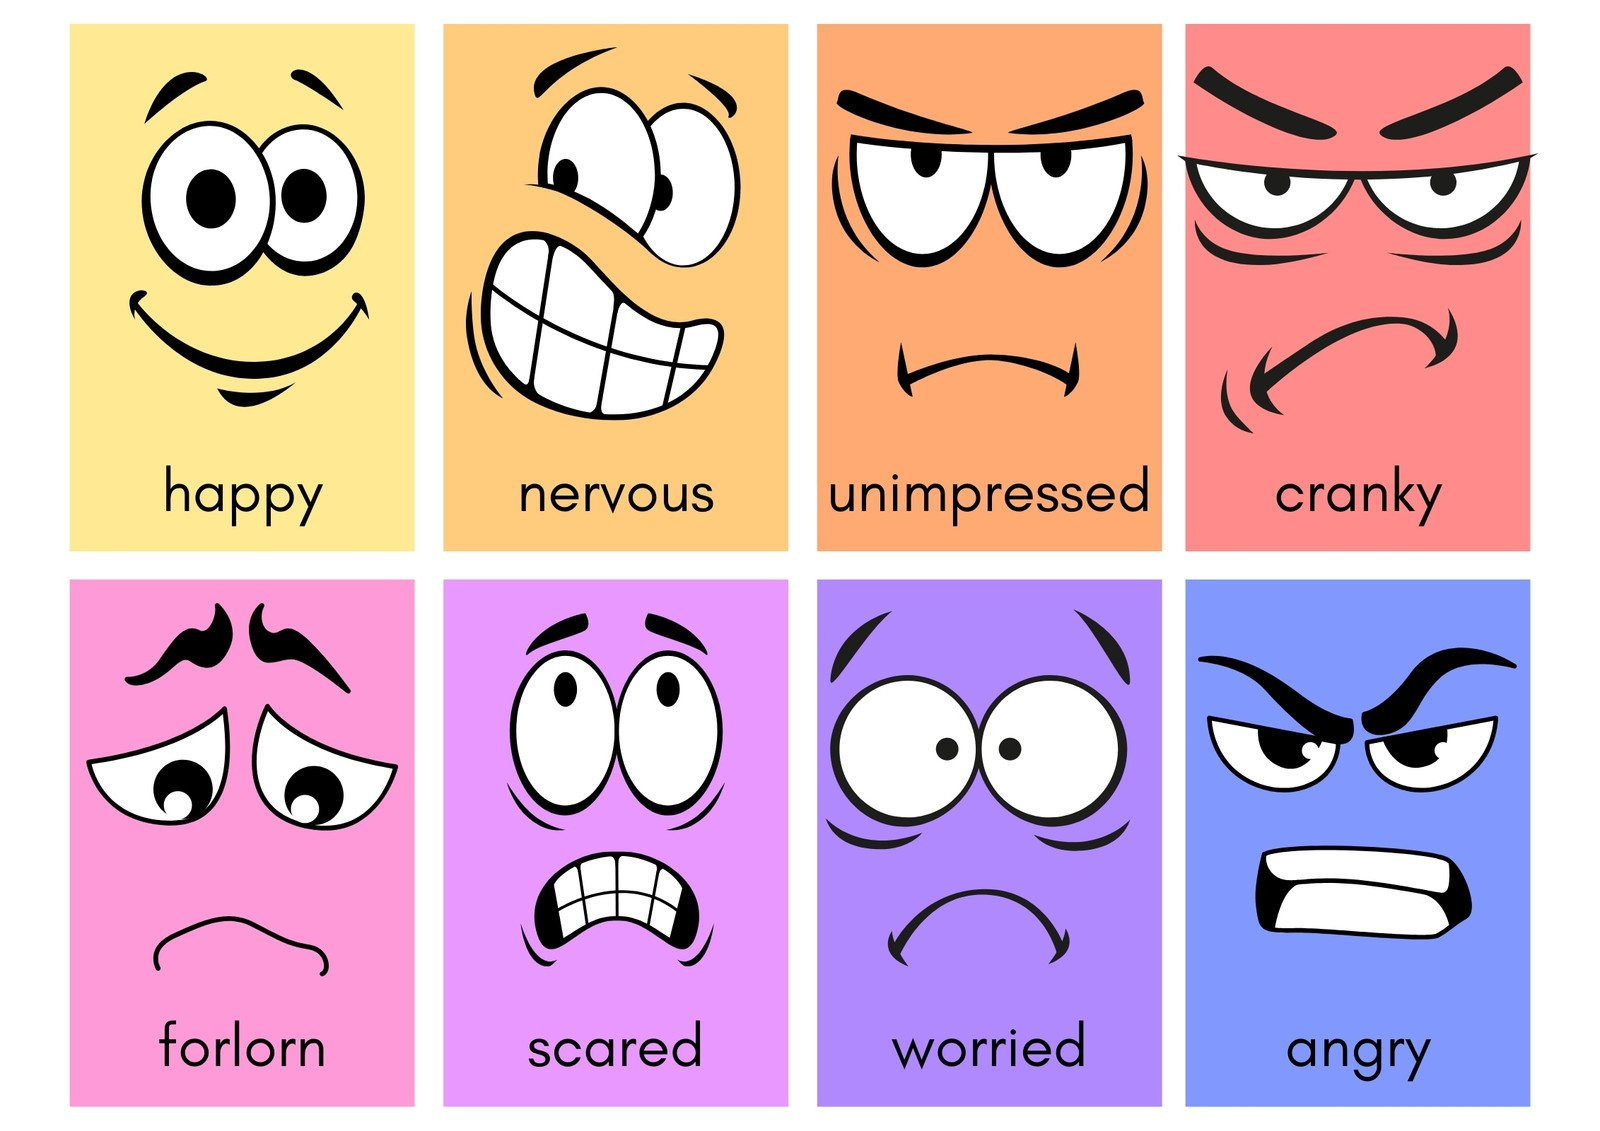 Free Printable Custom Emotions Flashcard Templates | Canva - Free Printable Mood Cards